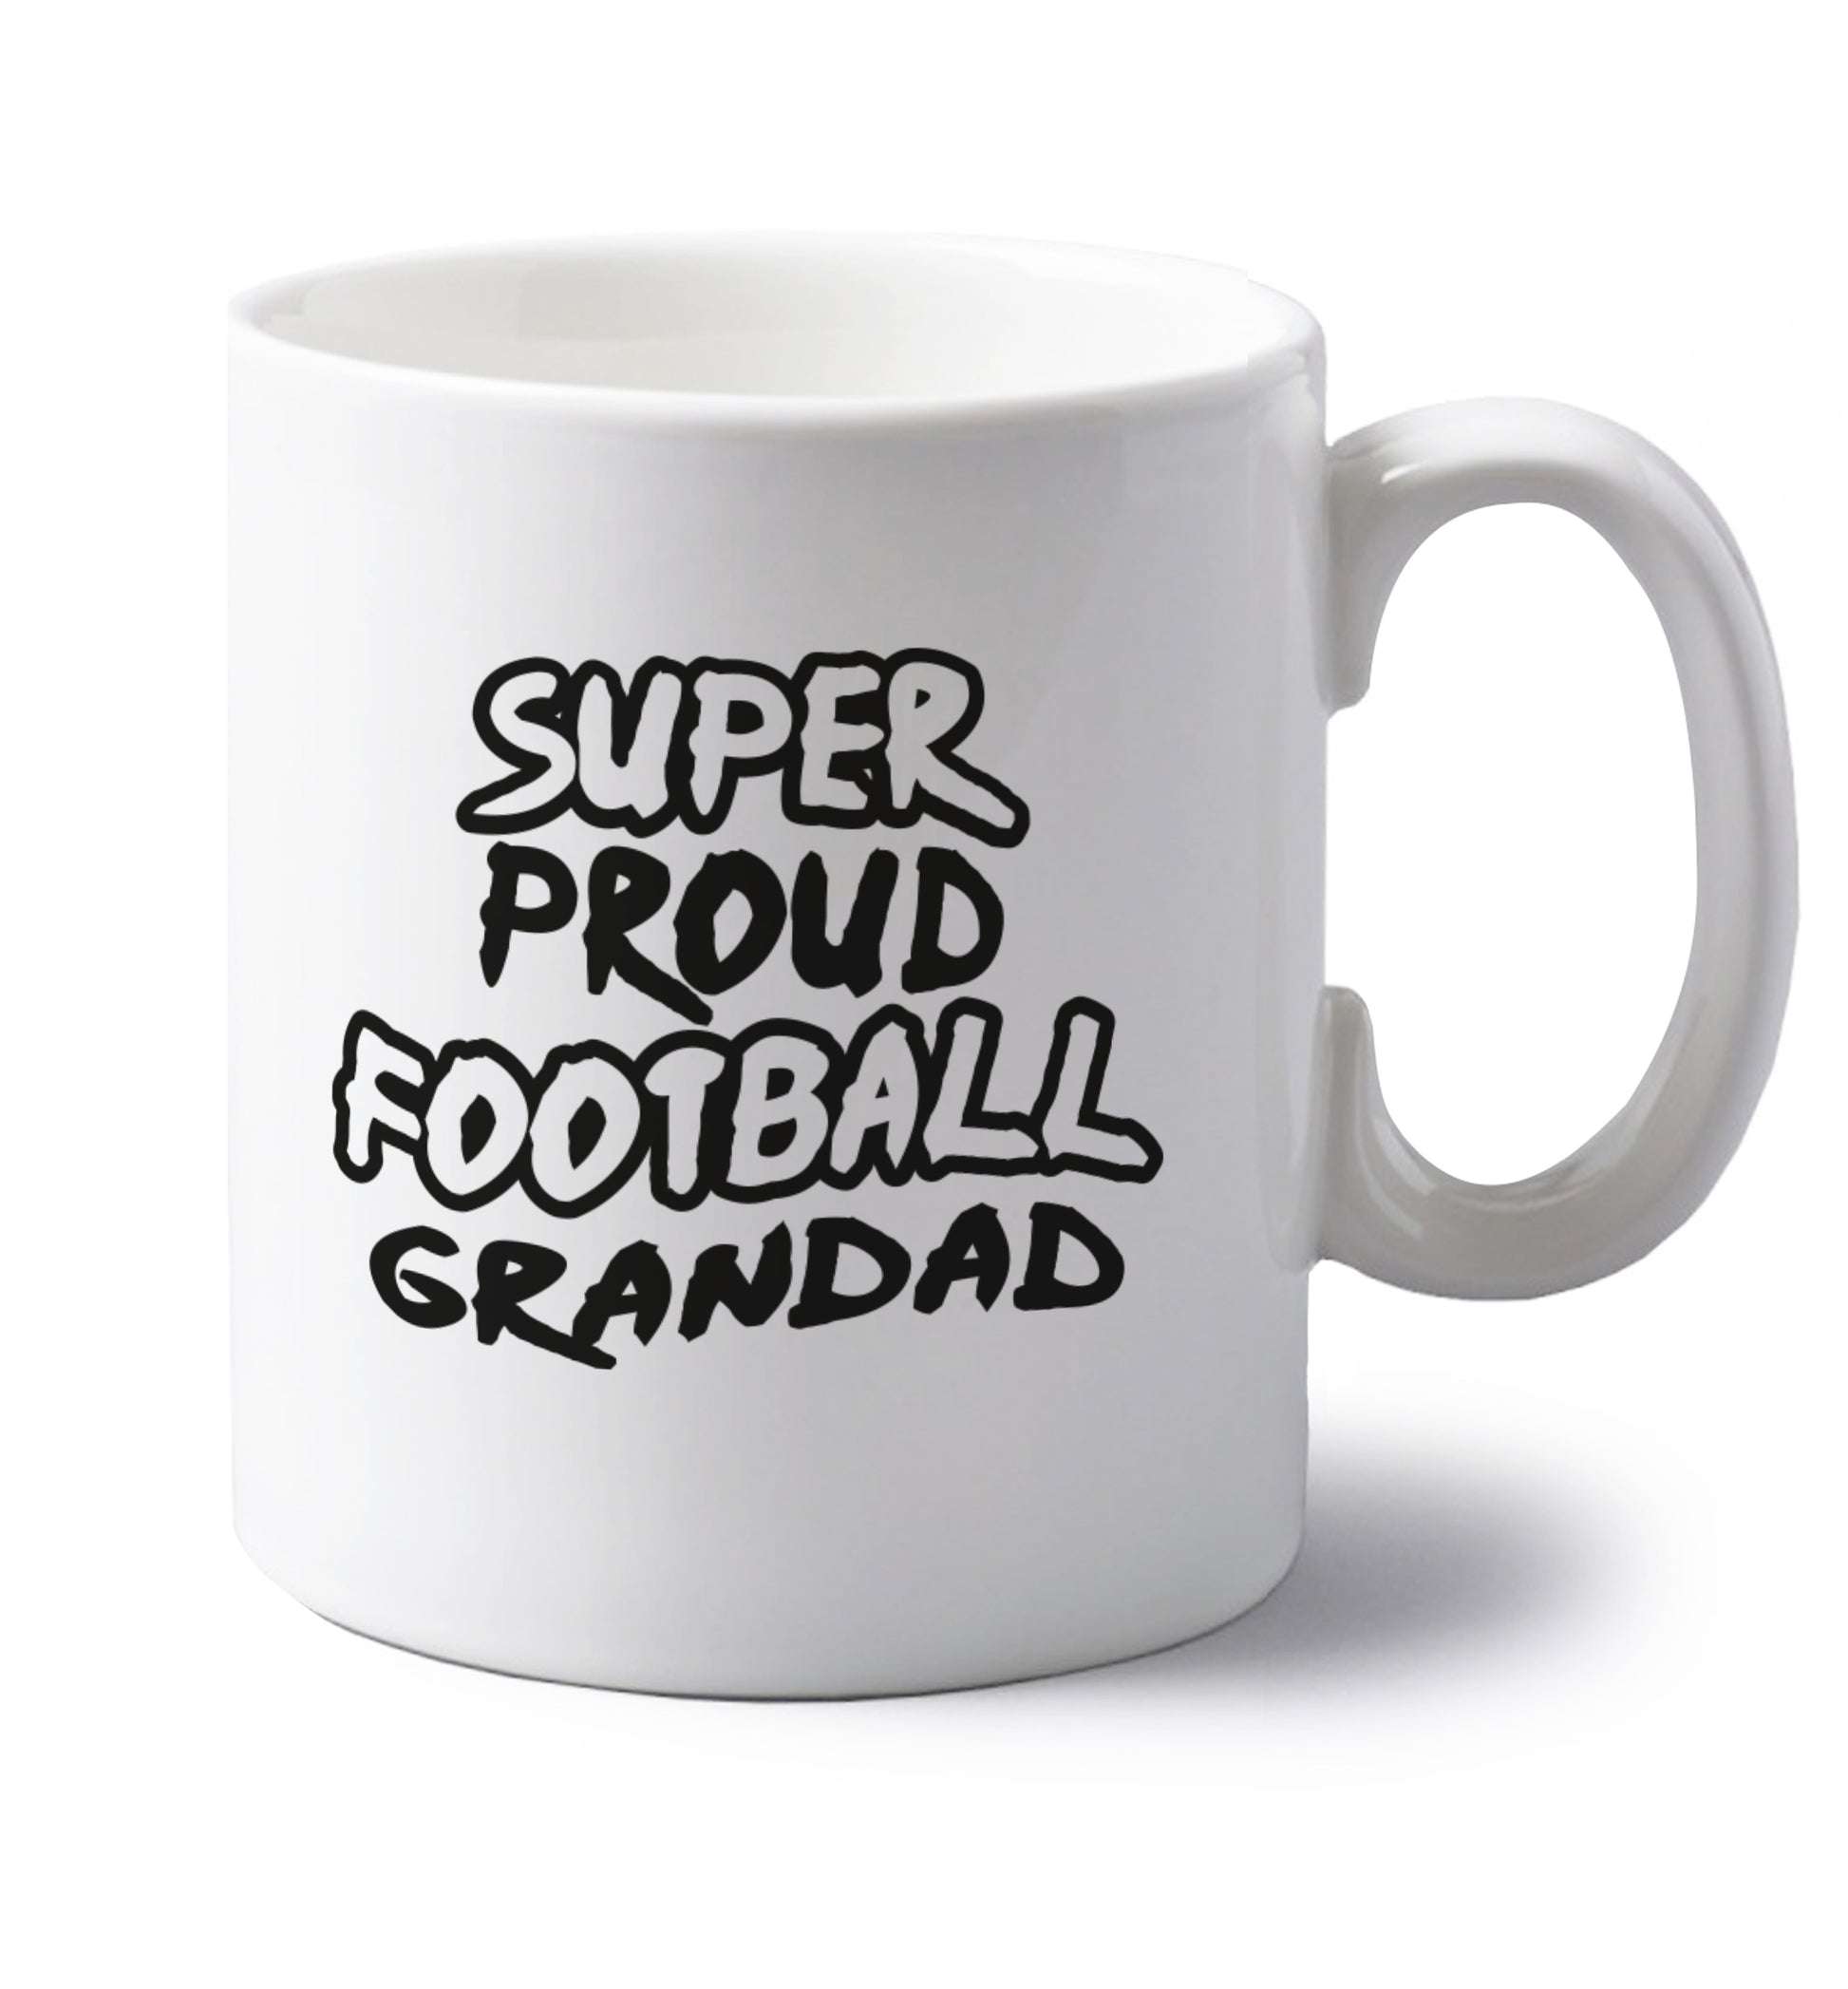 Super proud football grandad left handed white ceramic mug 